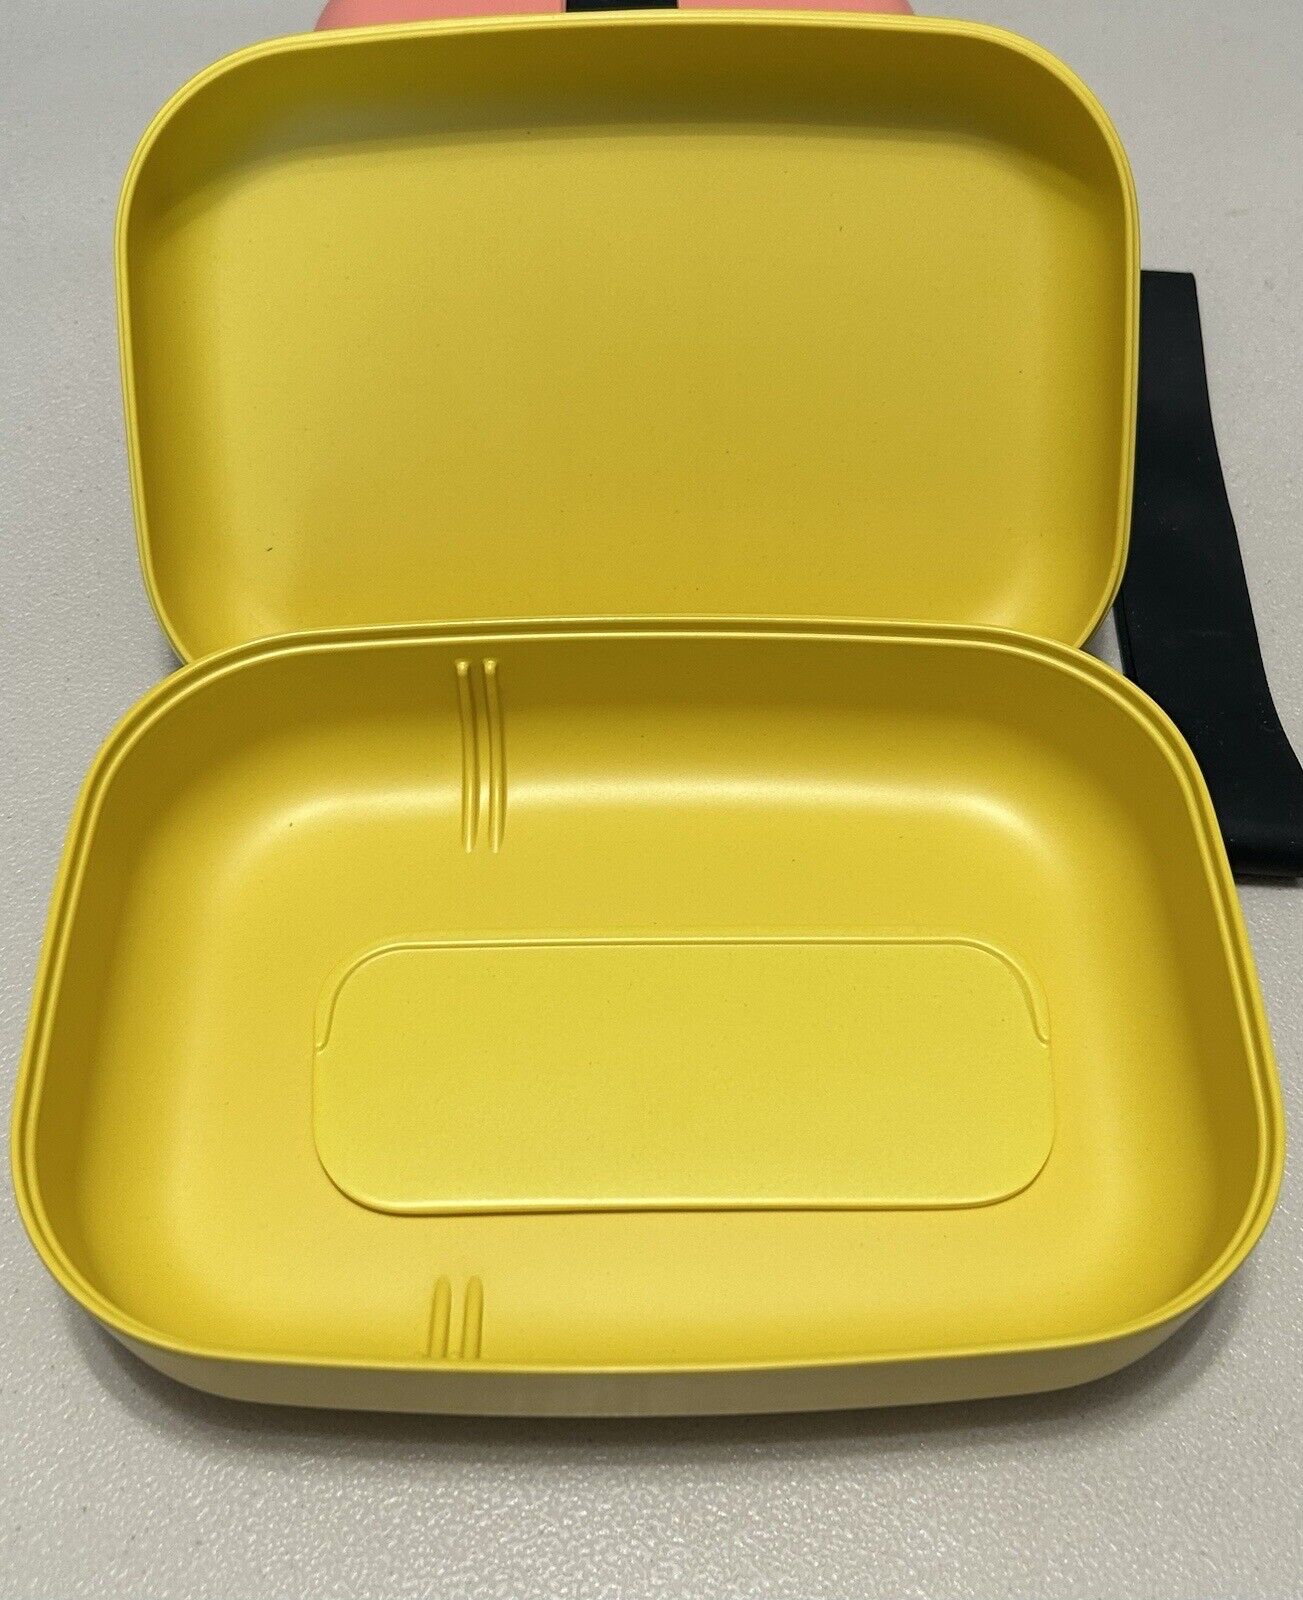 Rectangular Lemon Bento Lunch Box Biobu by Ekobo EUC 7.5” x 5.5” x 2.5”